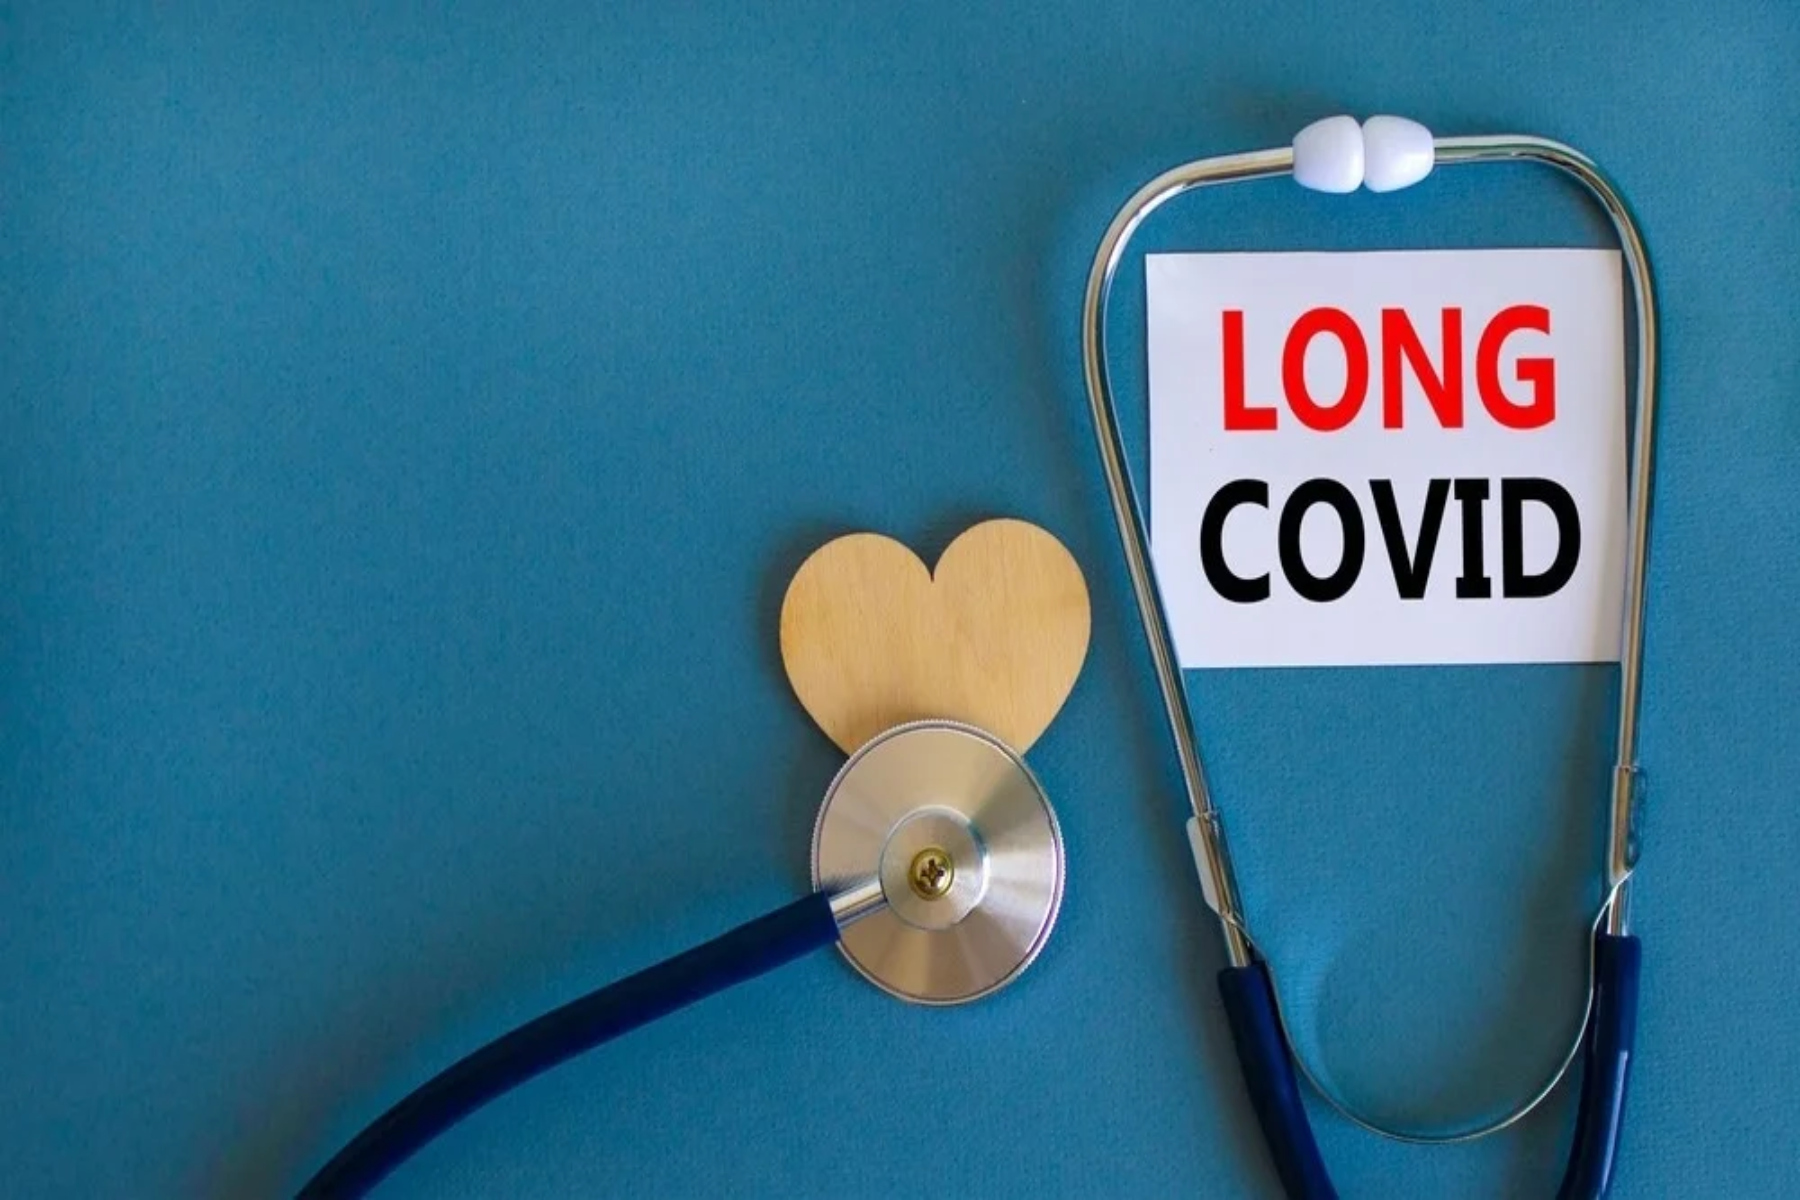 Covid-19: Ο Long Covid προκαλεί σοβαρά προβλήματα στους καρκινοπαθείς